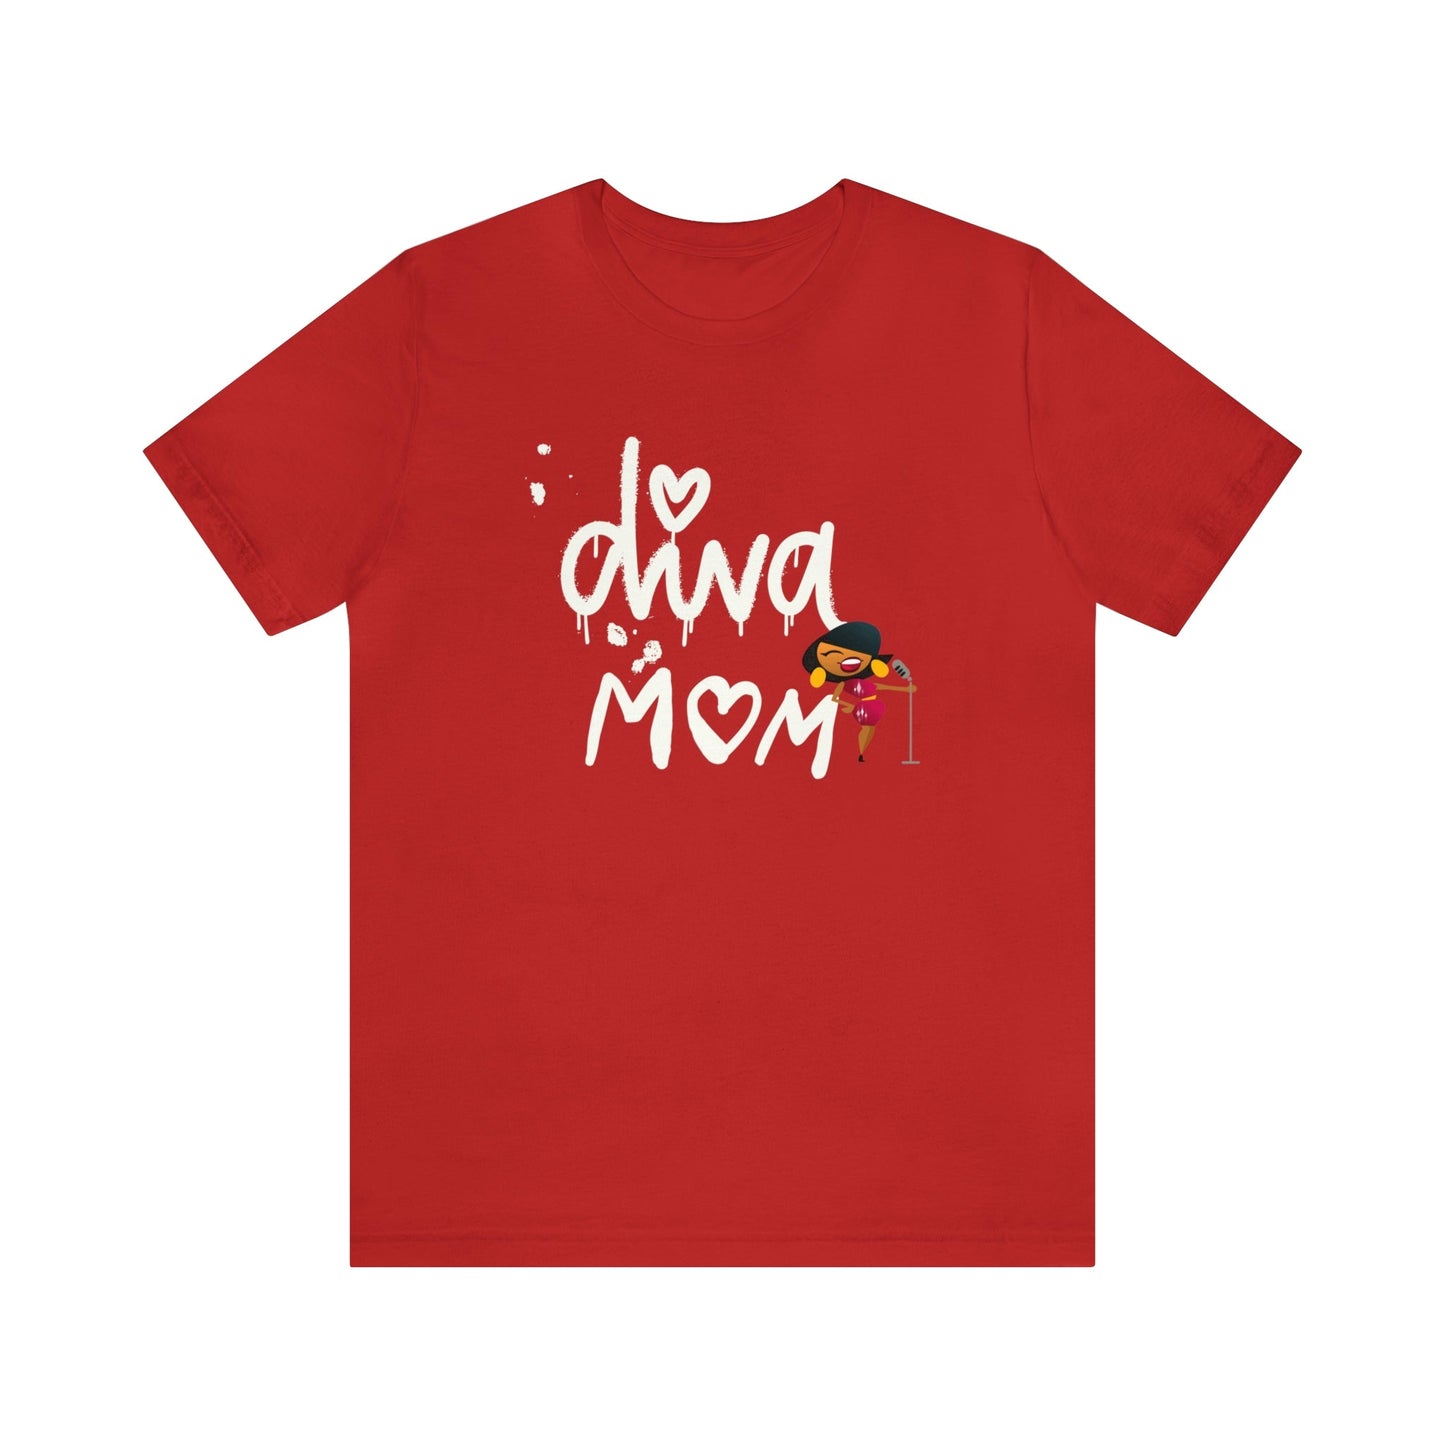 Diva MOM Sings T-shirt-T-Shirt-Red-S-mysticalcherry